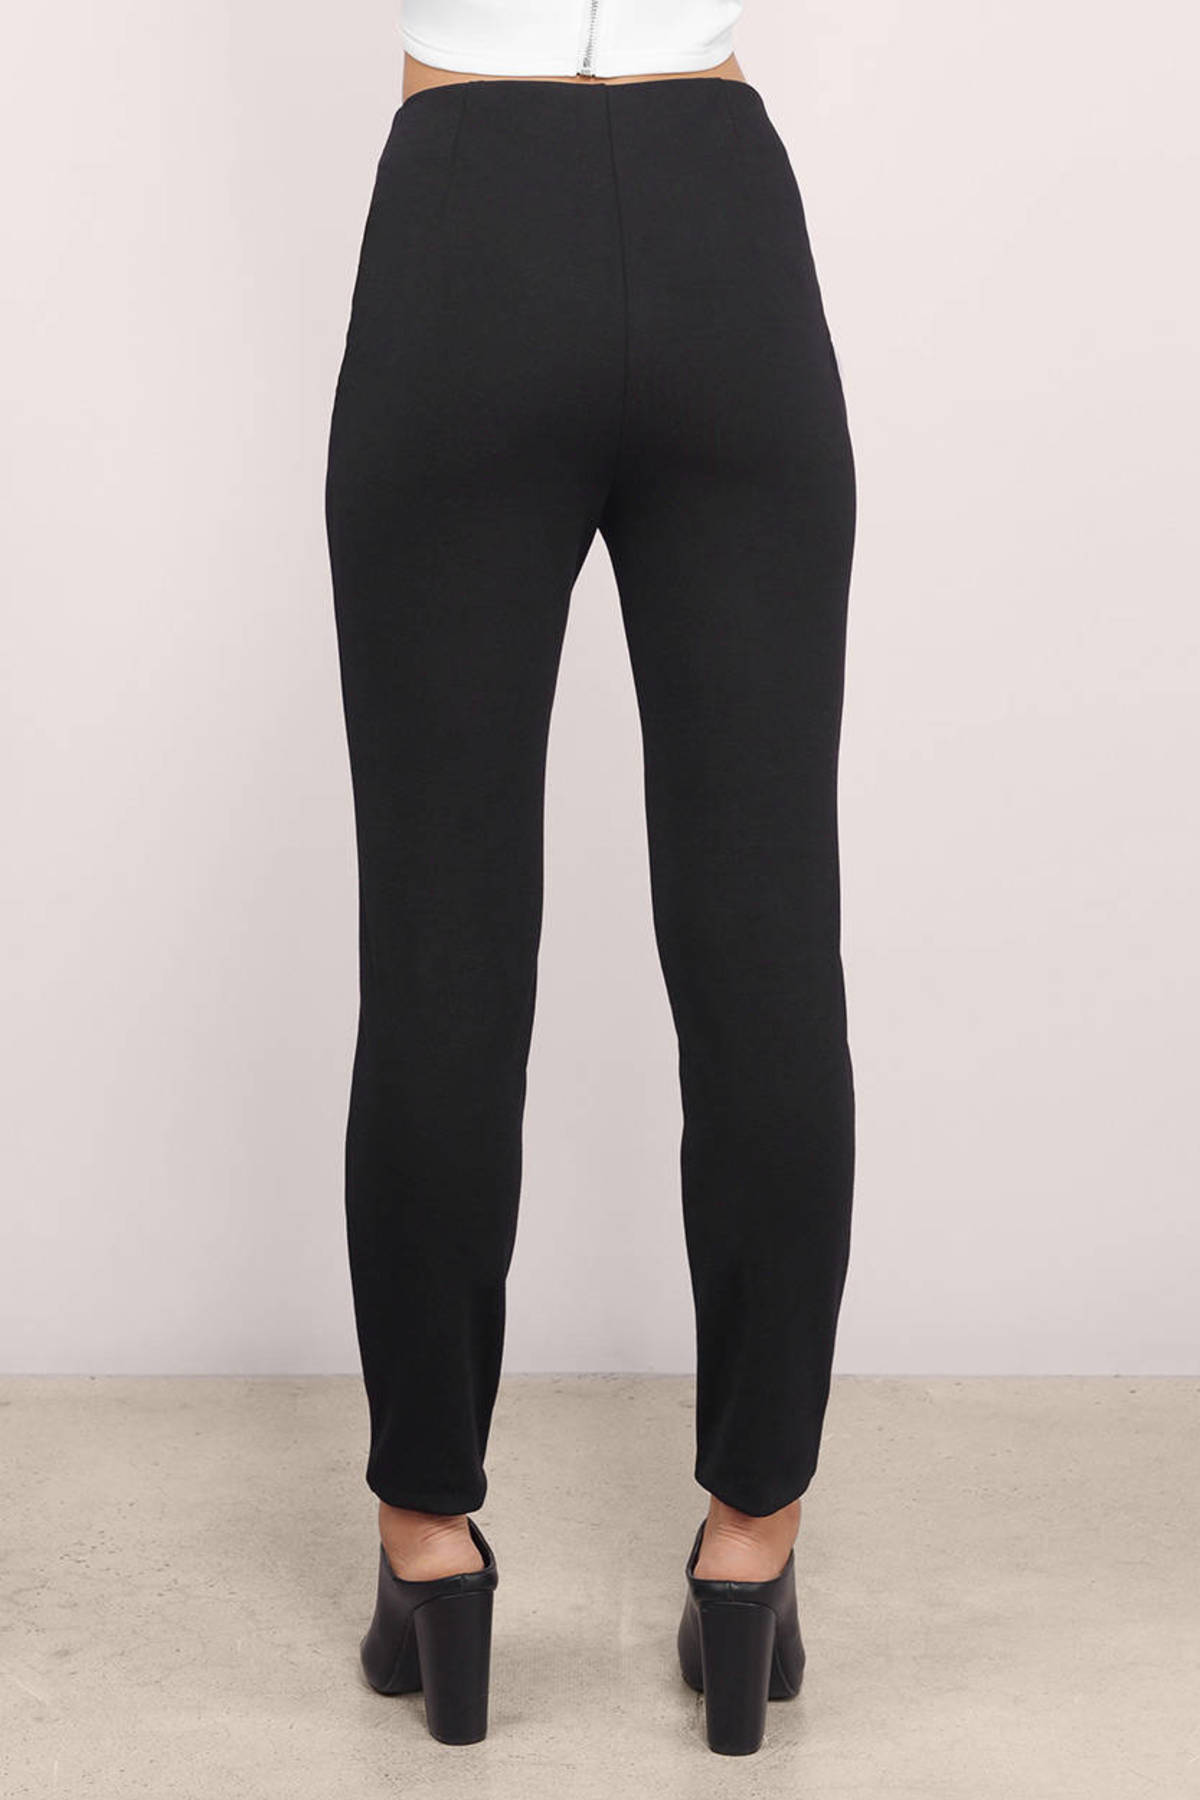 Jenna High Waisted Pants in Black - $22 | Tobi US